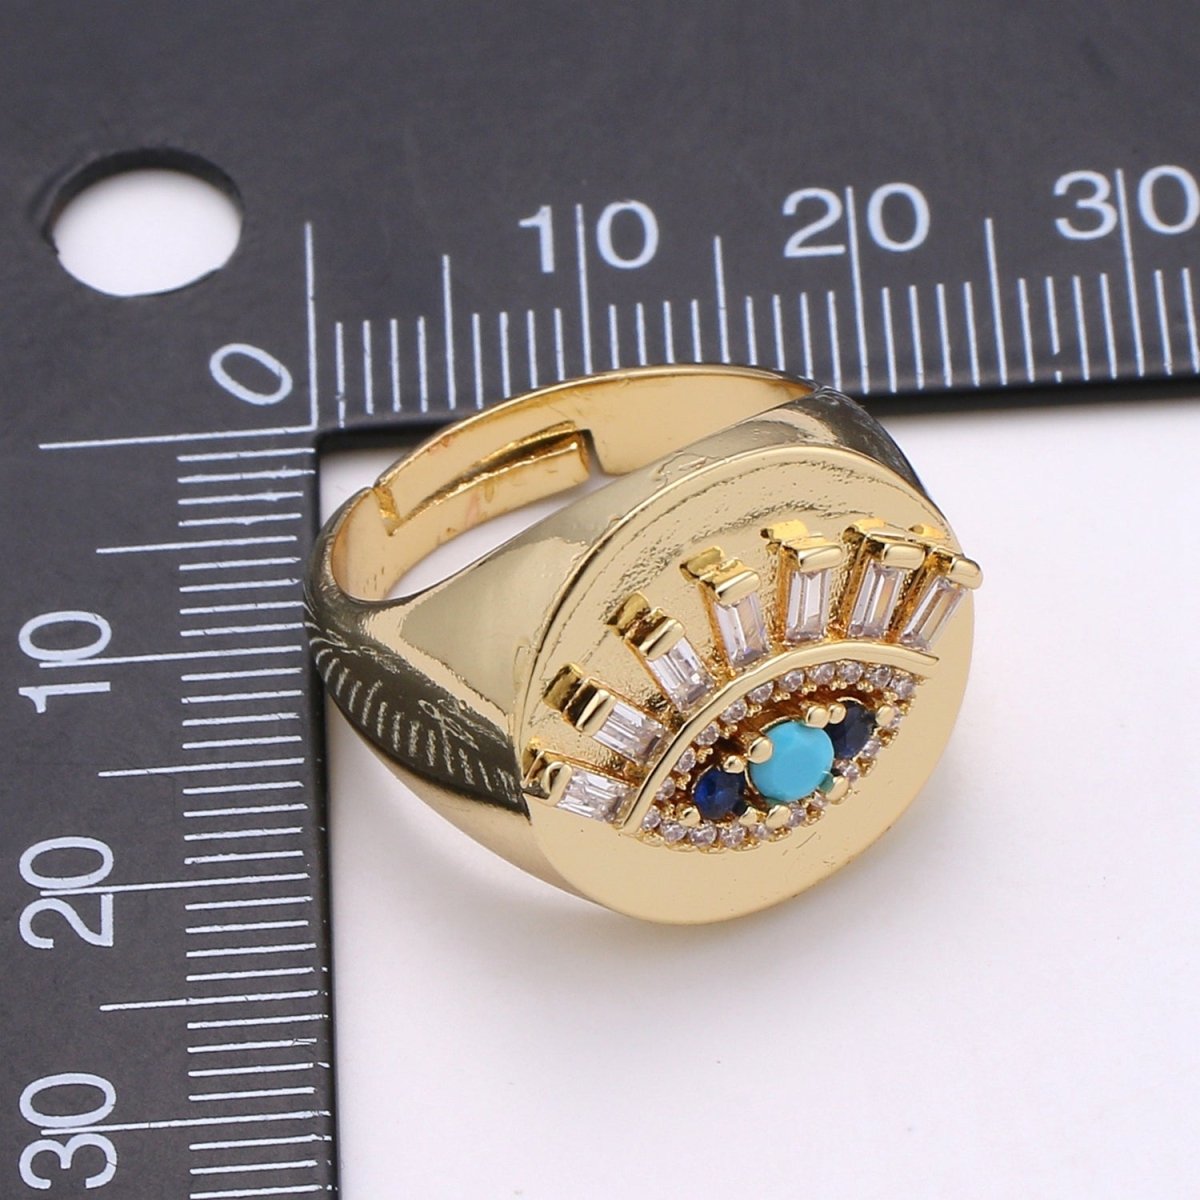 Evil Eye Ring, Signet Ring, Adjustable Gold Ring, Evil Eye Jewelry, Cubic Eye Ring, Stackable Ring, Turkish Evil Eye Amulet Jewelry R-197 - DLUXCA